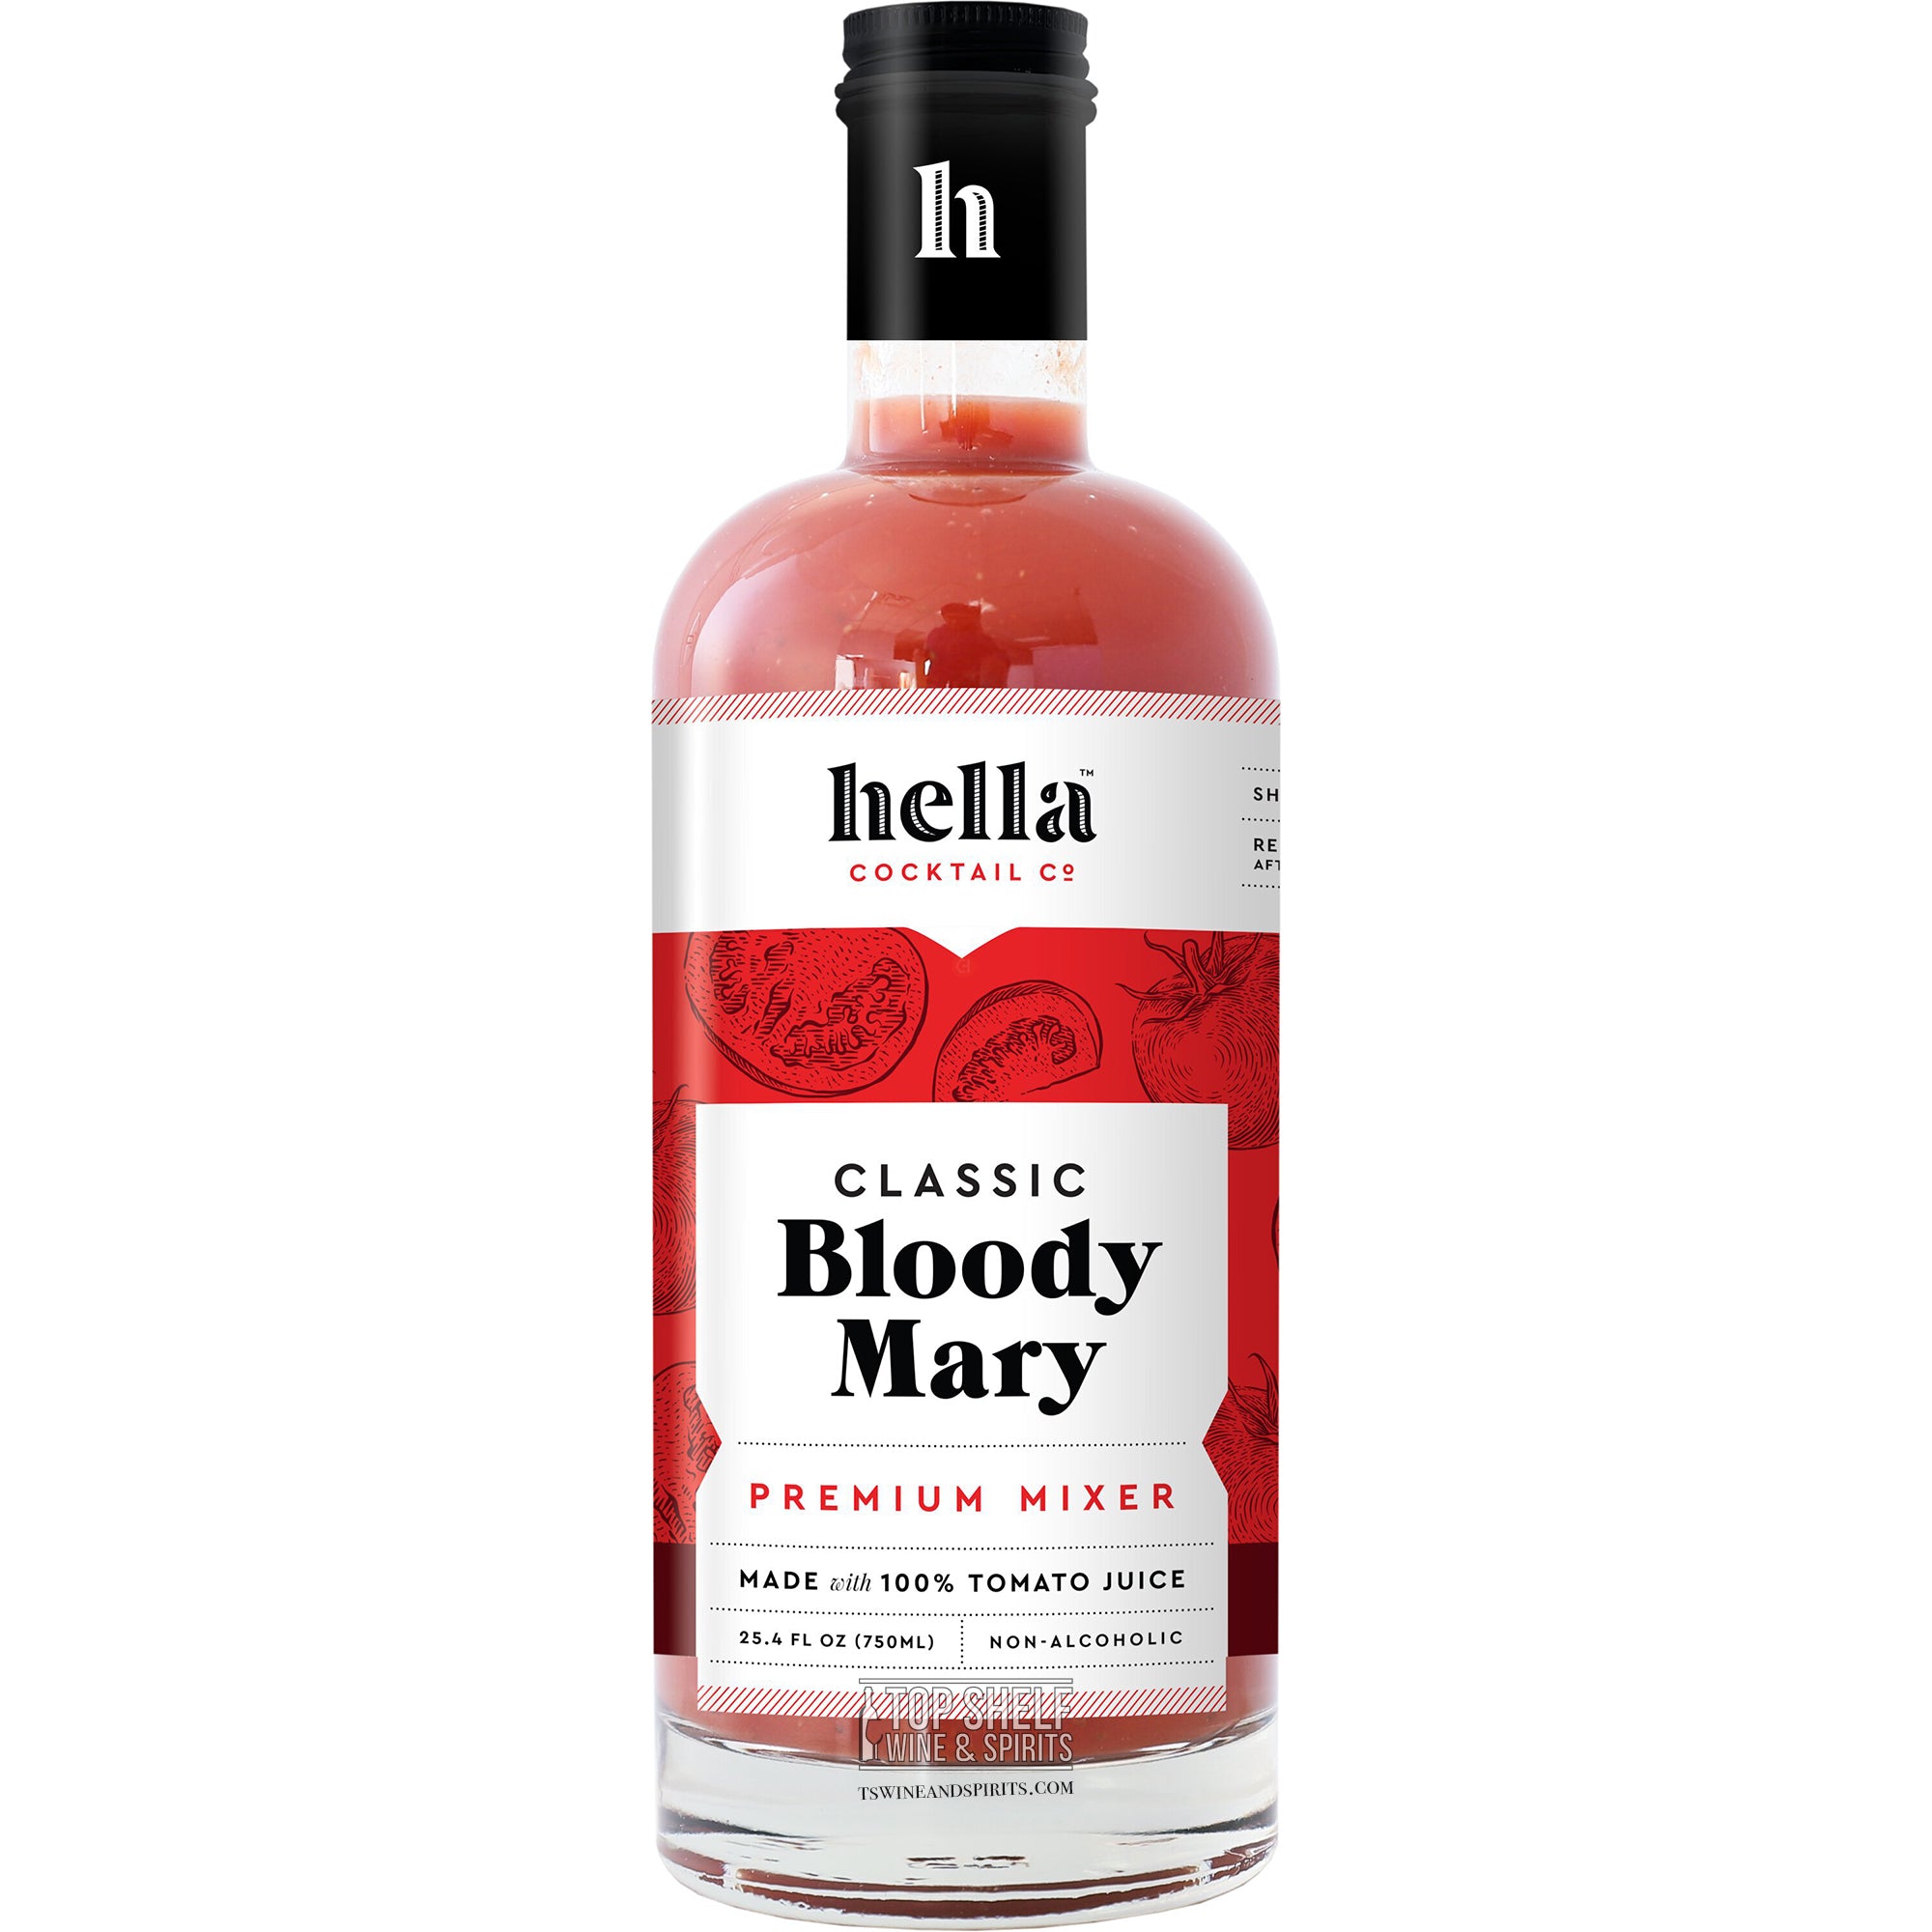 Hella Classic Bloody Mary Mixer